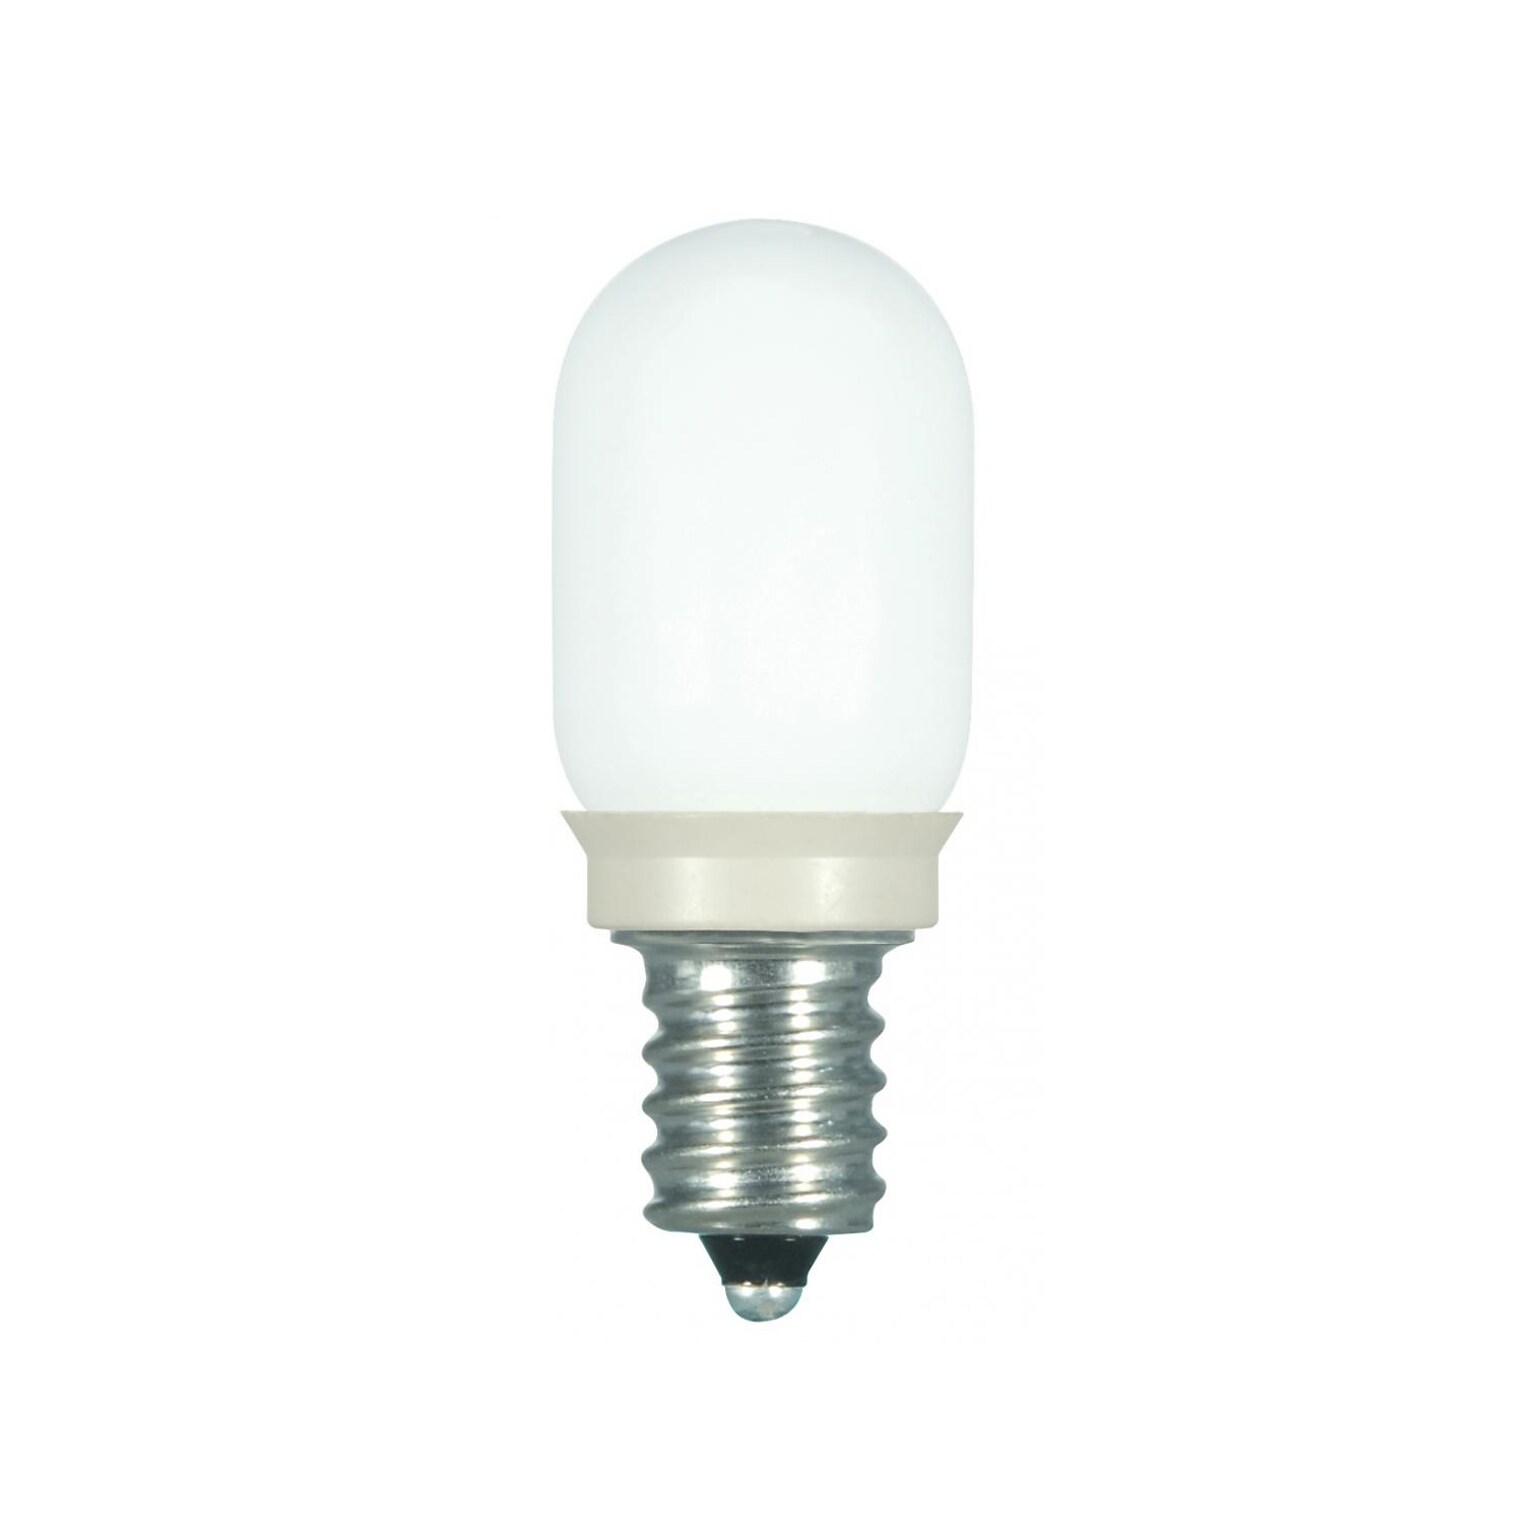 Satco Lighting 0.8-Watt Warm White LED Decorative Bulb, 12/Carton (S9176)